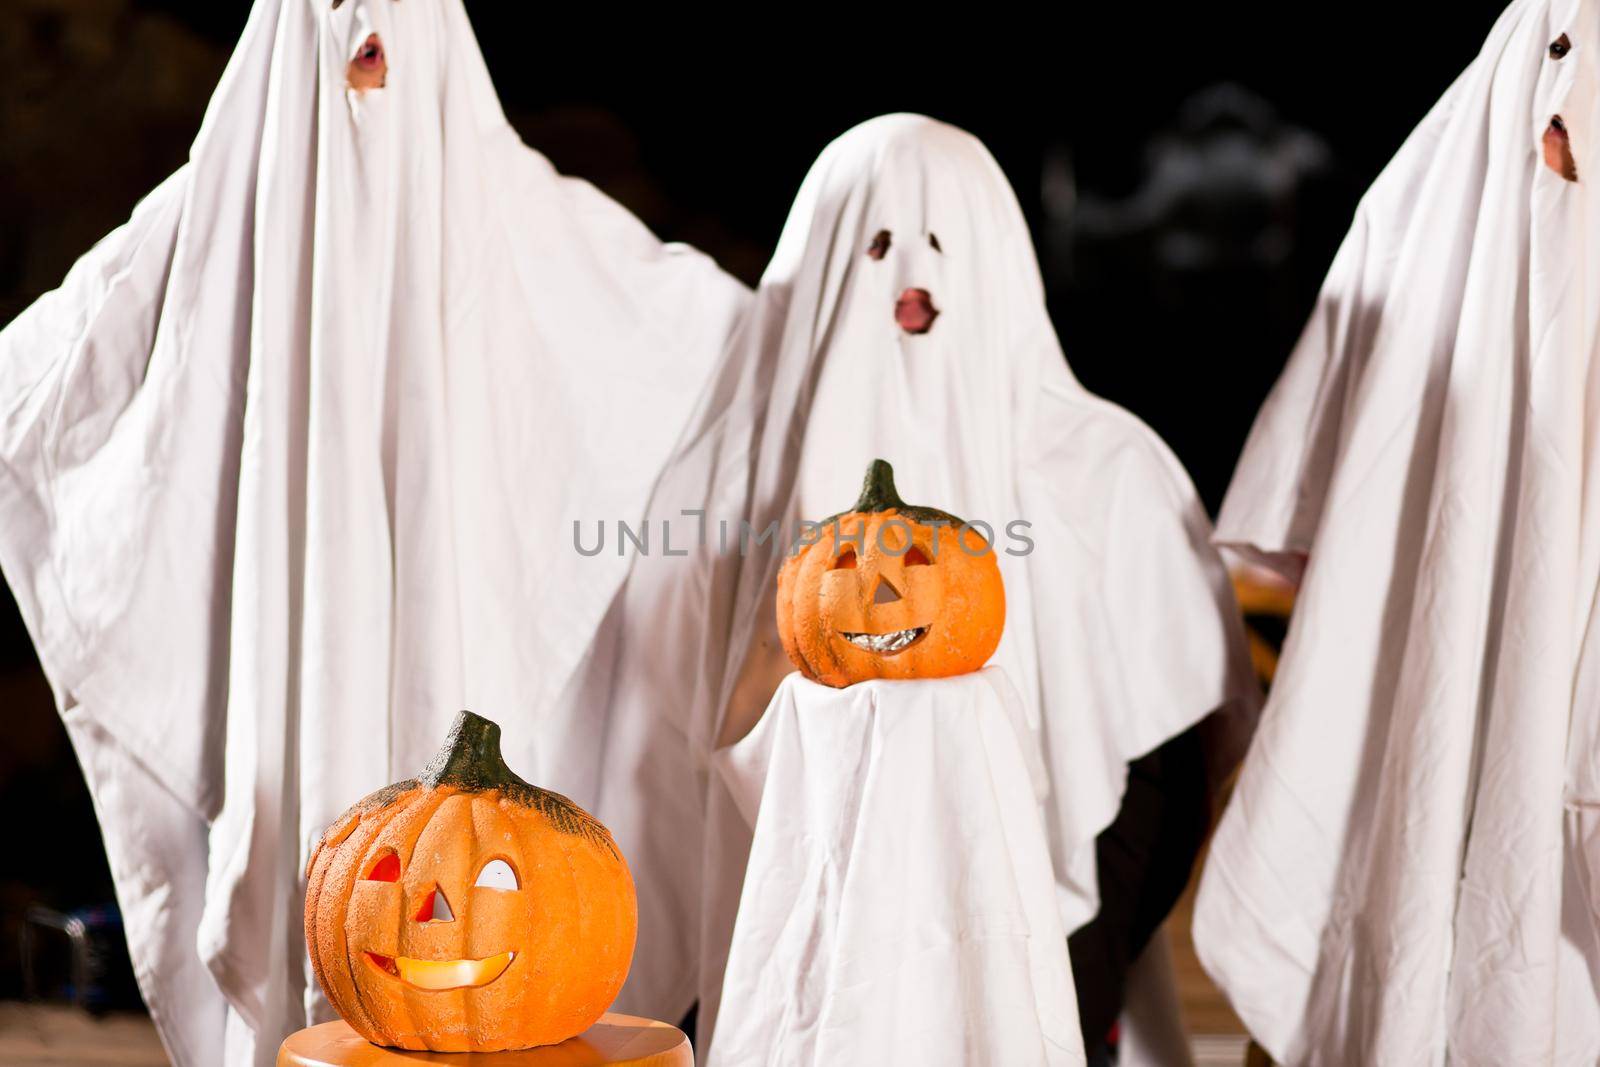 spooks at Halloween - focus on pumpkin by Kzenon